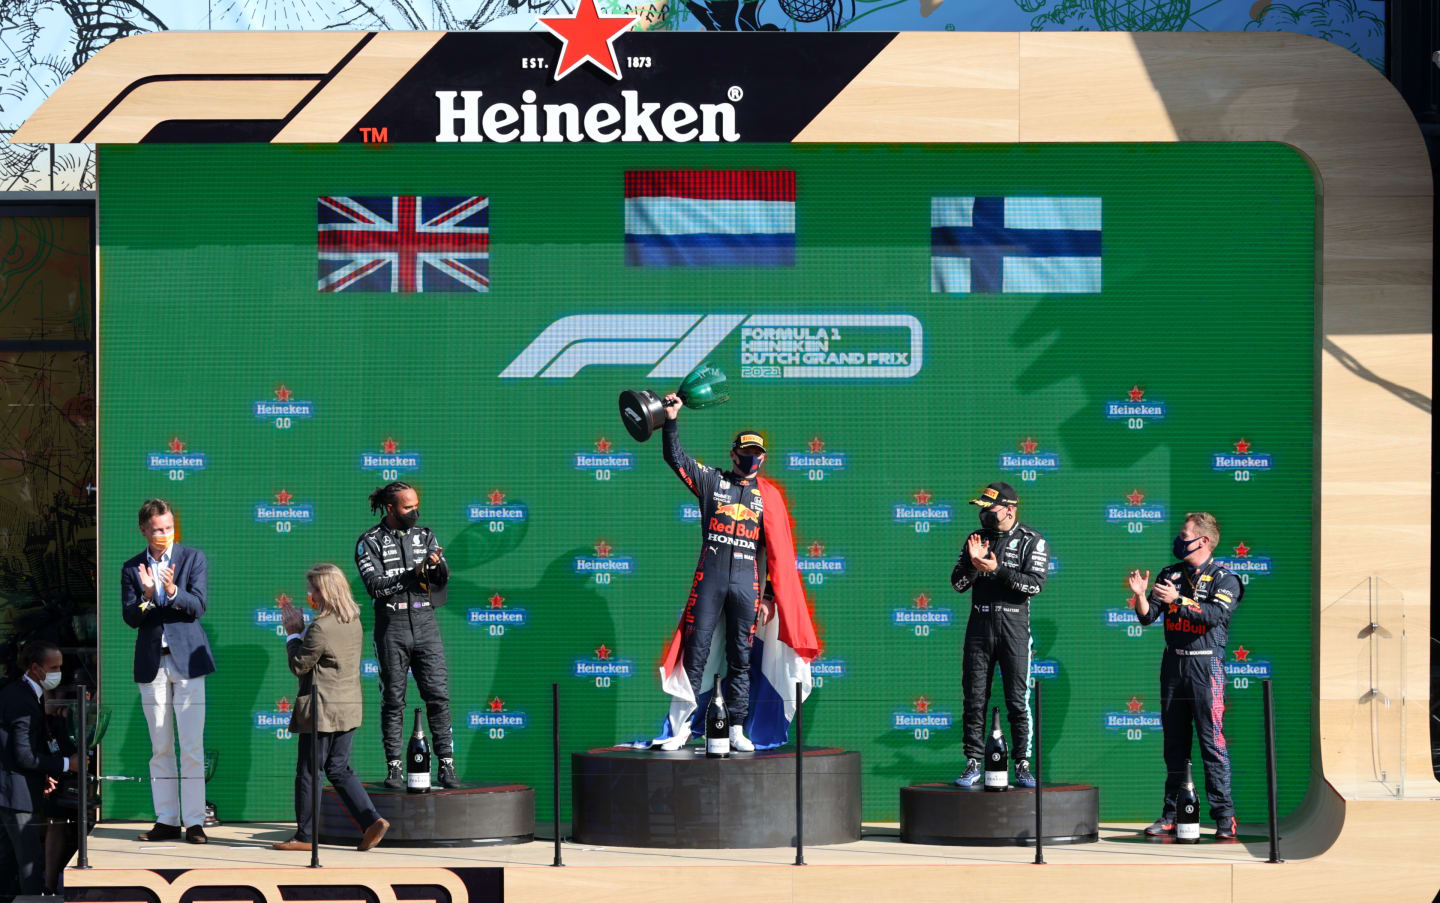 ZANDVOORT, NETHERLANDS - SEPTEMBER 05: Race winner Max Verstappen of Netherlands and Red Bull